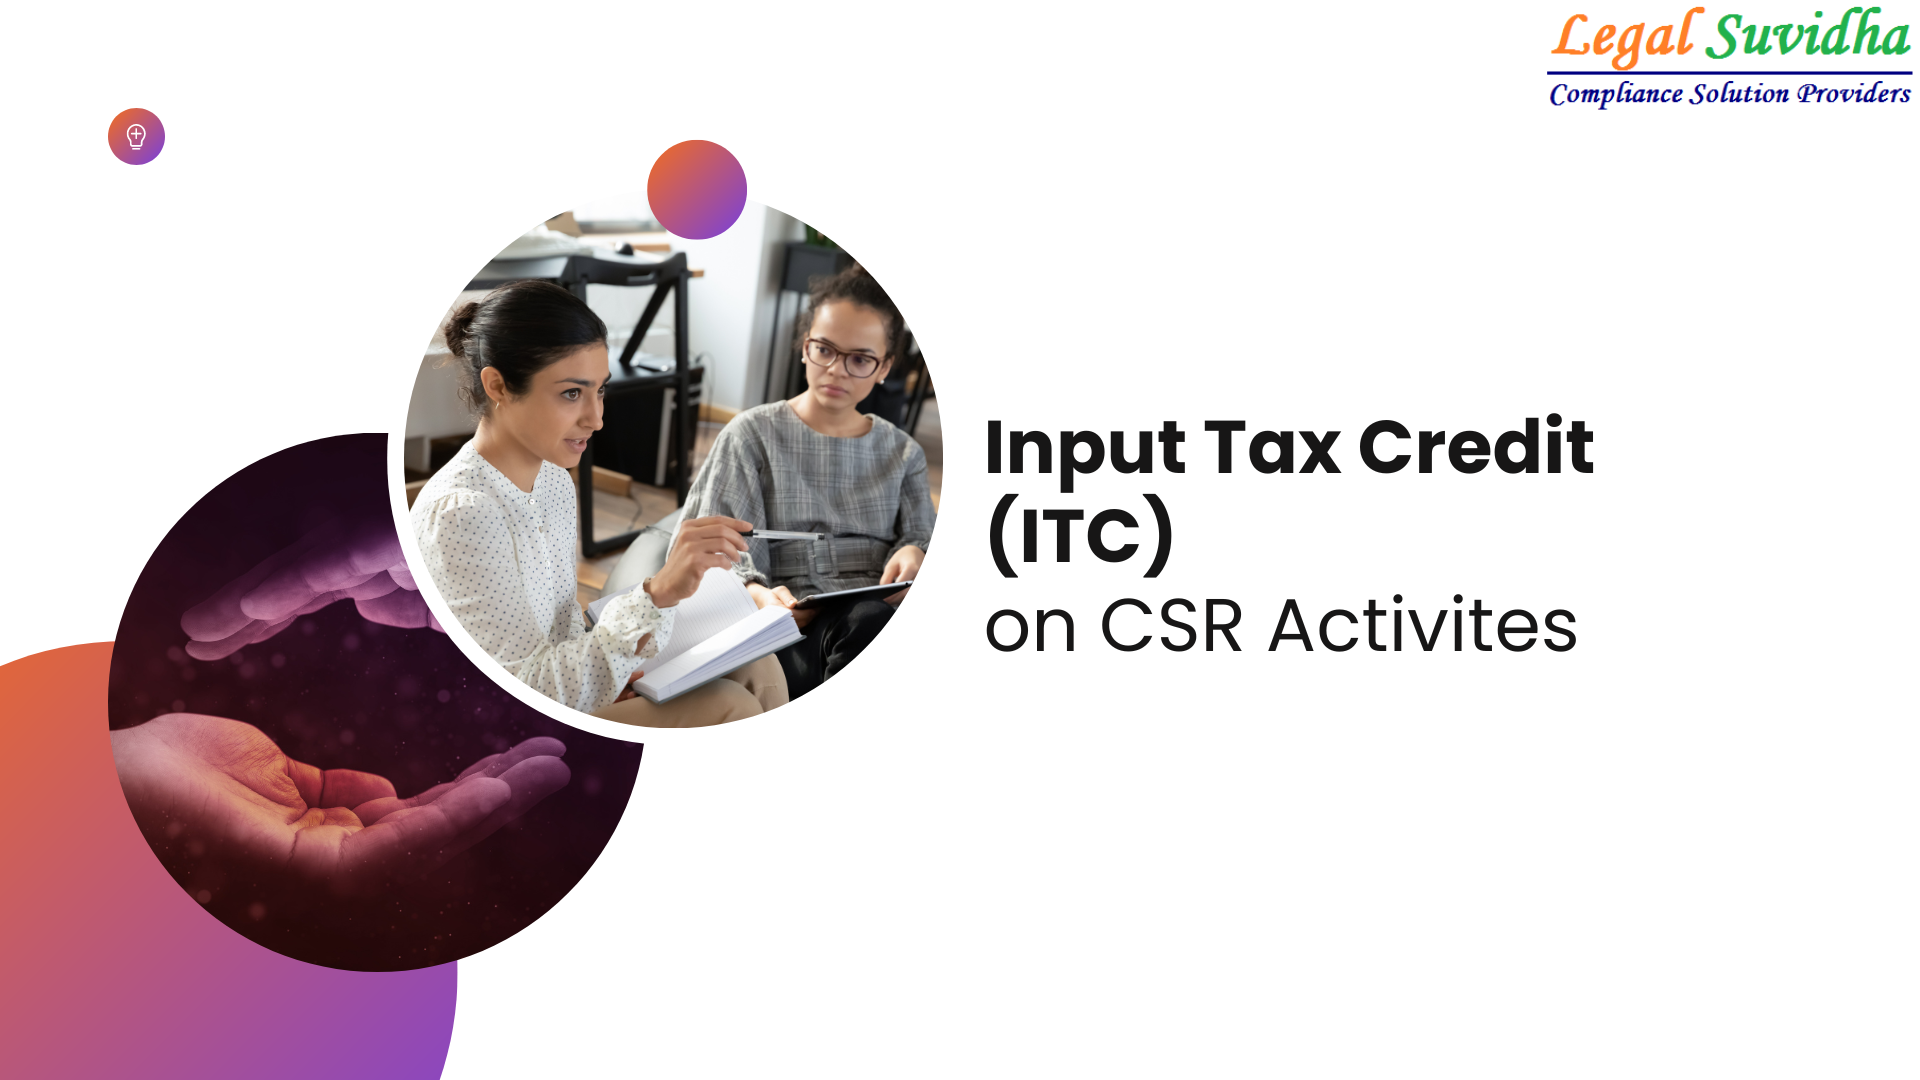 Input Tax Credit (ITC) on CSR Activities under GST